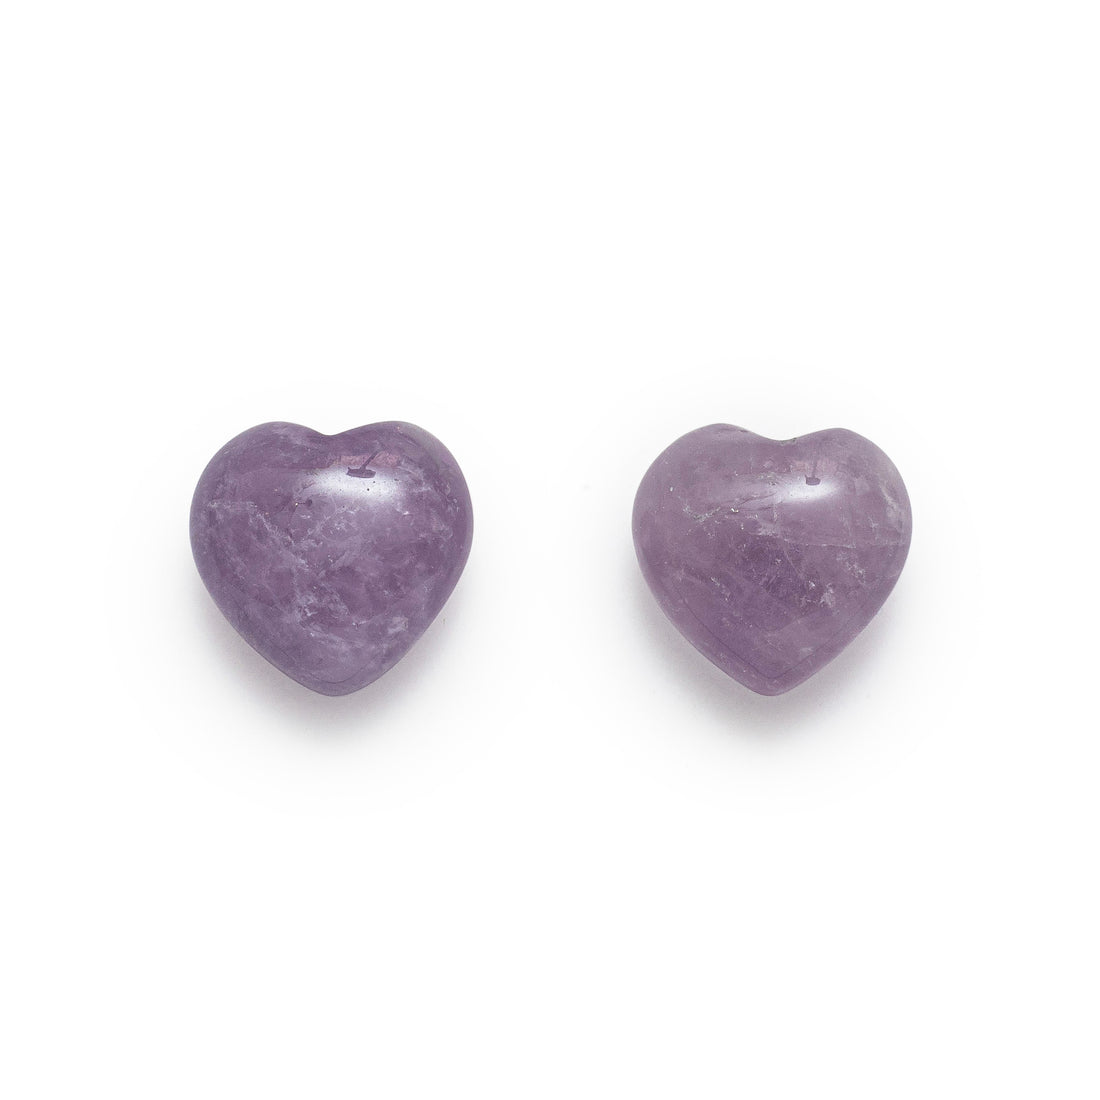 Small Heart in Purple Lepidolite stone